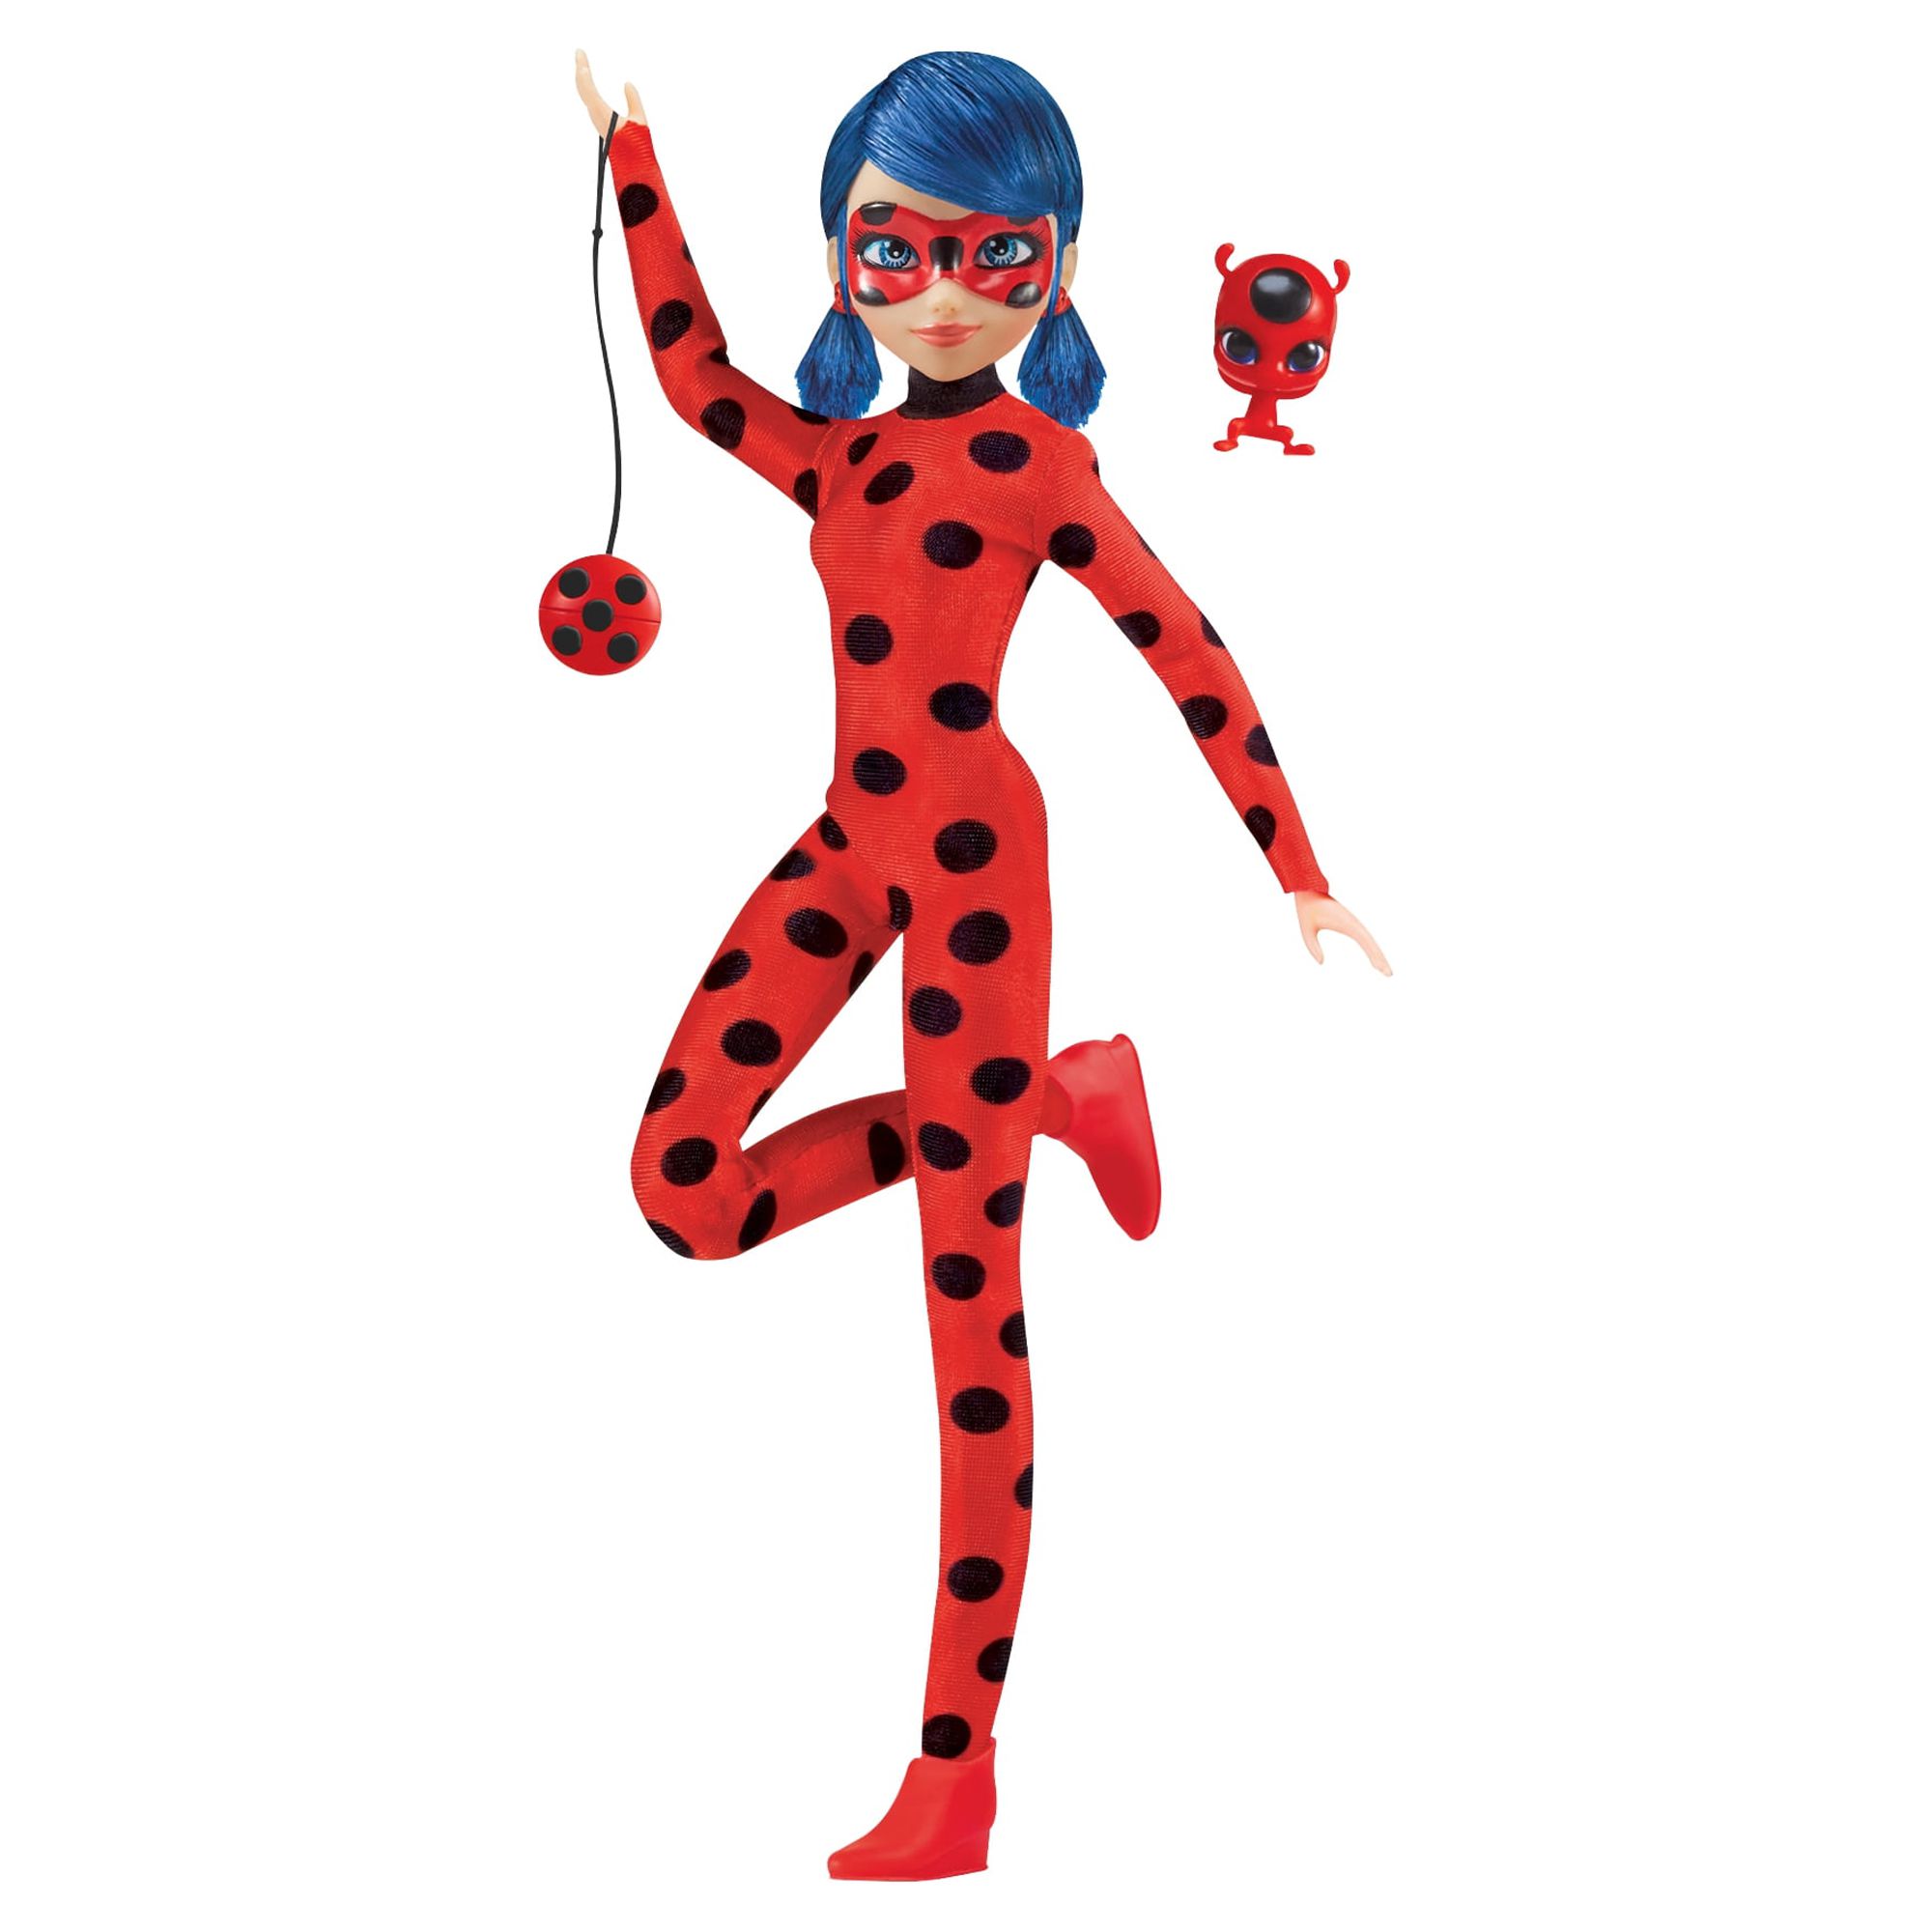 Miraculous Ladybug Doll - image 2 of 6